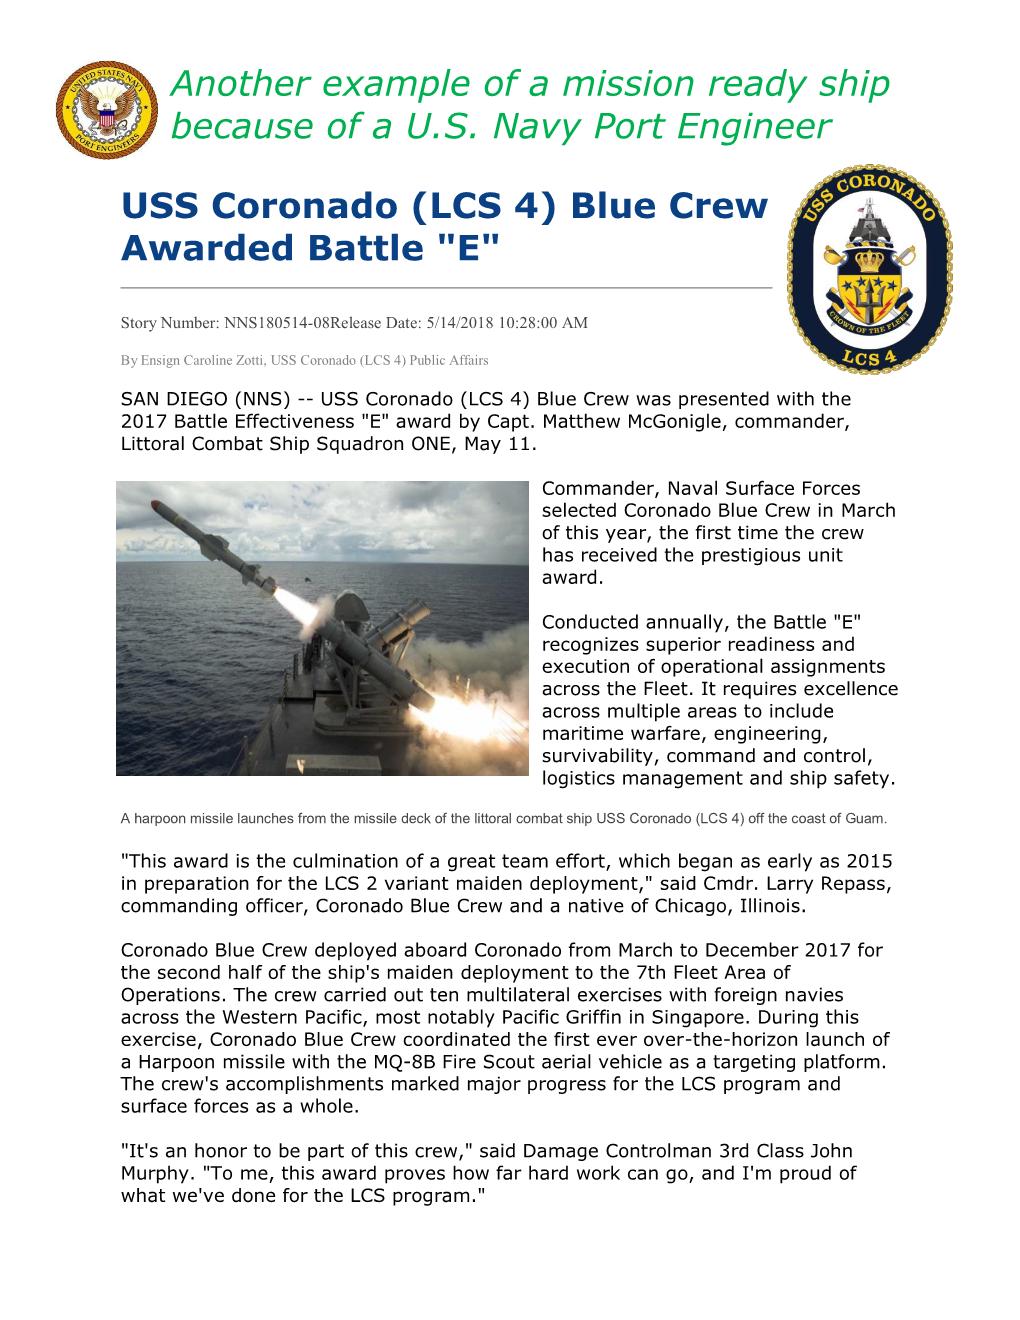 USS Coronado (LCS 4) Blue Crew Awarded Battle "E"